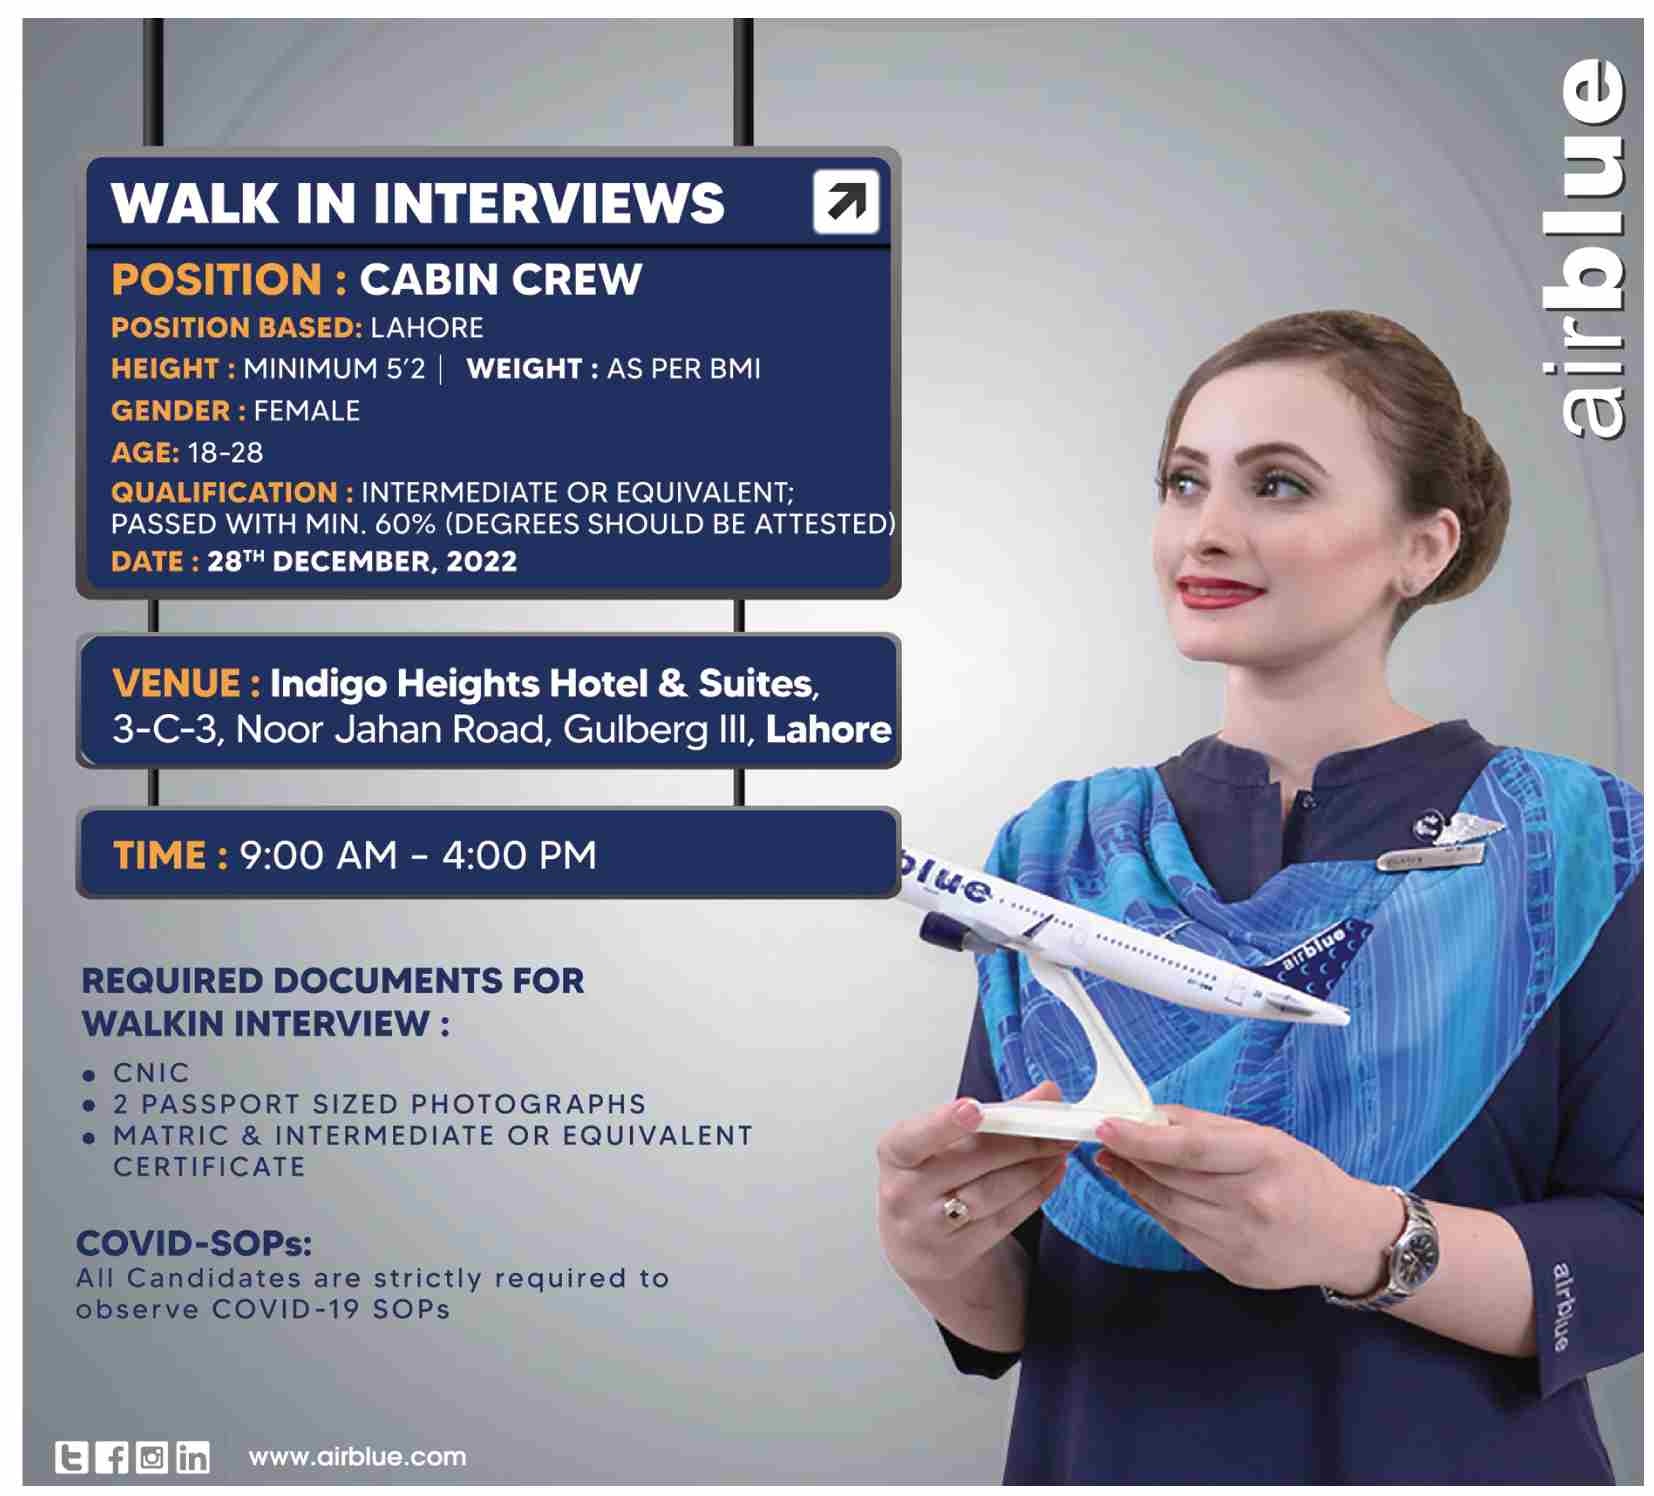 Air Blue Cabin Crew Jobs 2023 Apply Online Last Date